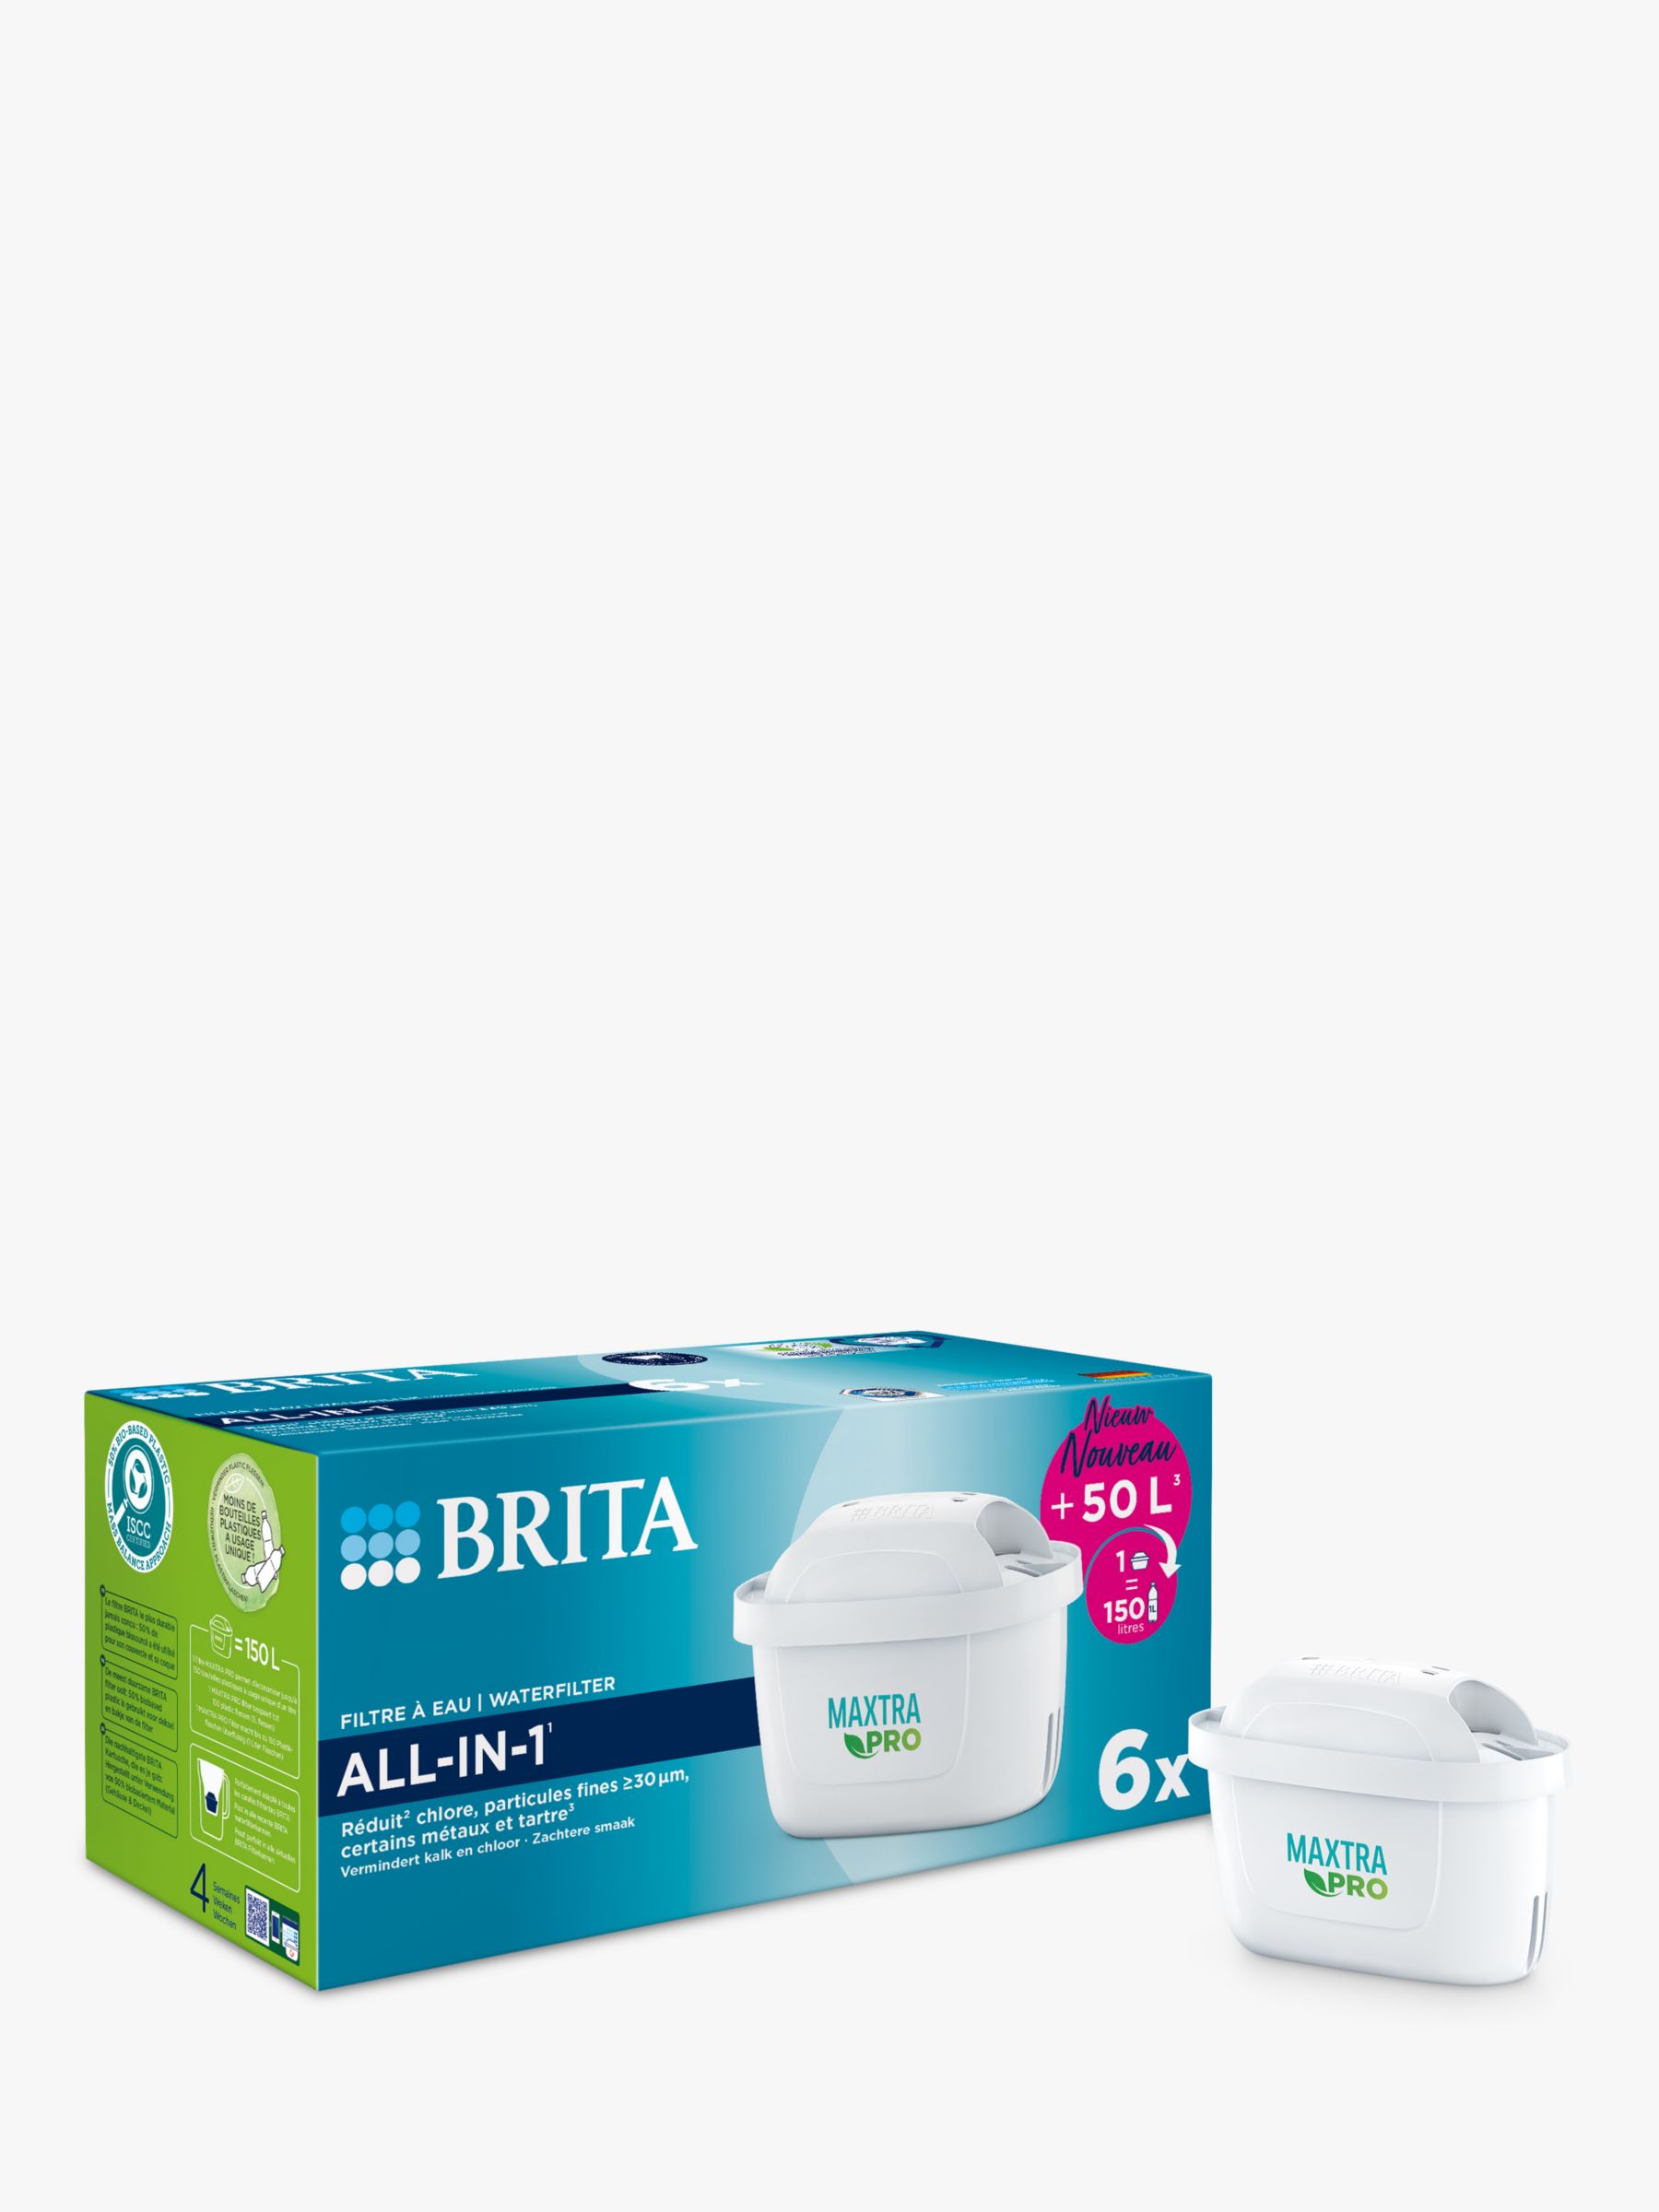 Brita Maxtra PLUS – Filter Cartridge, White, 5 + 1